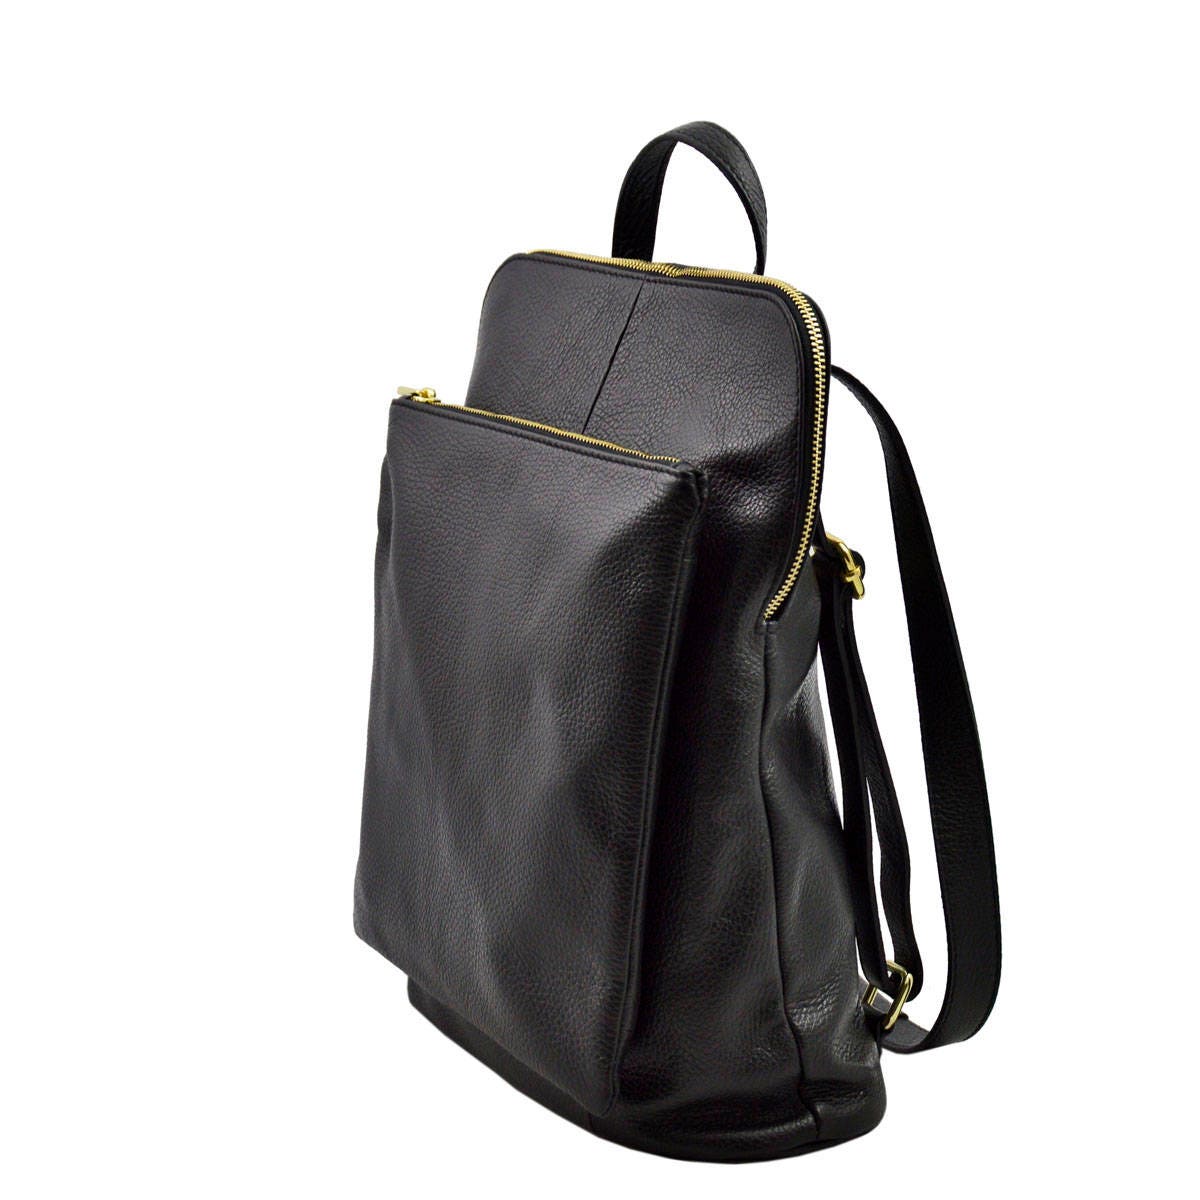 Genuine Leather Backpack and Shoulder image